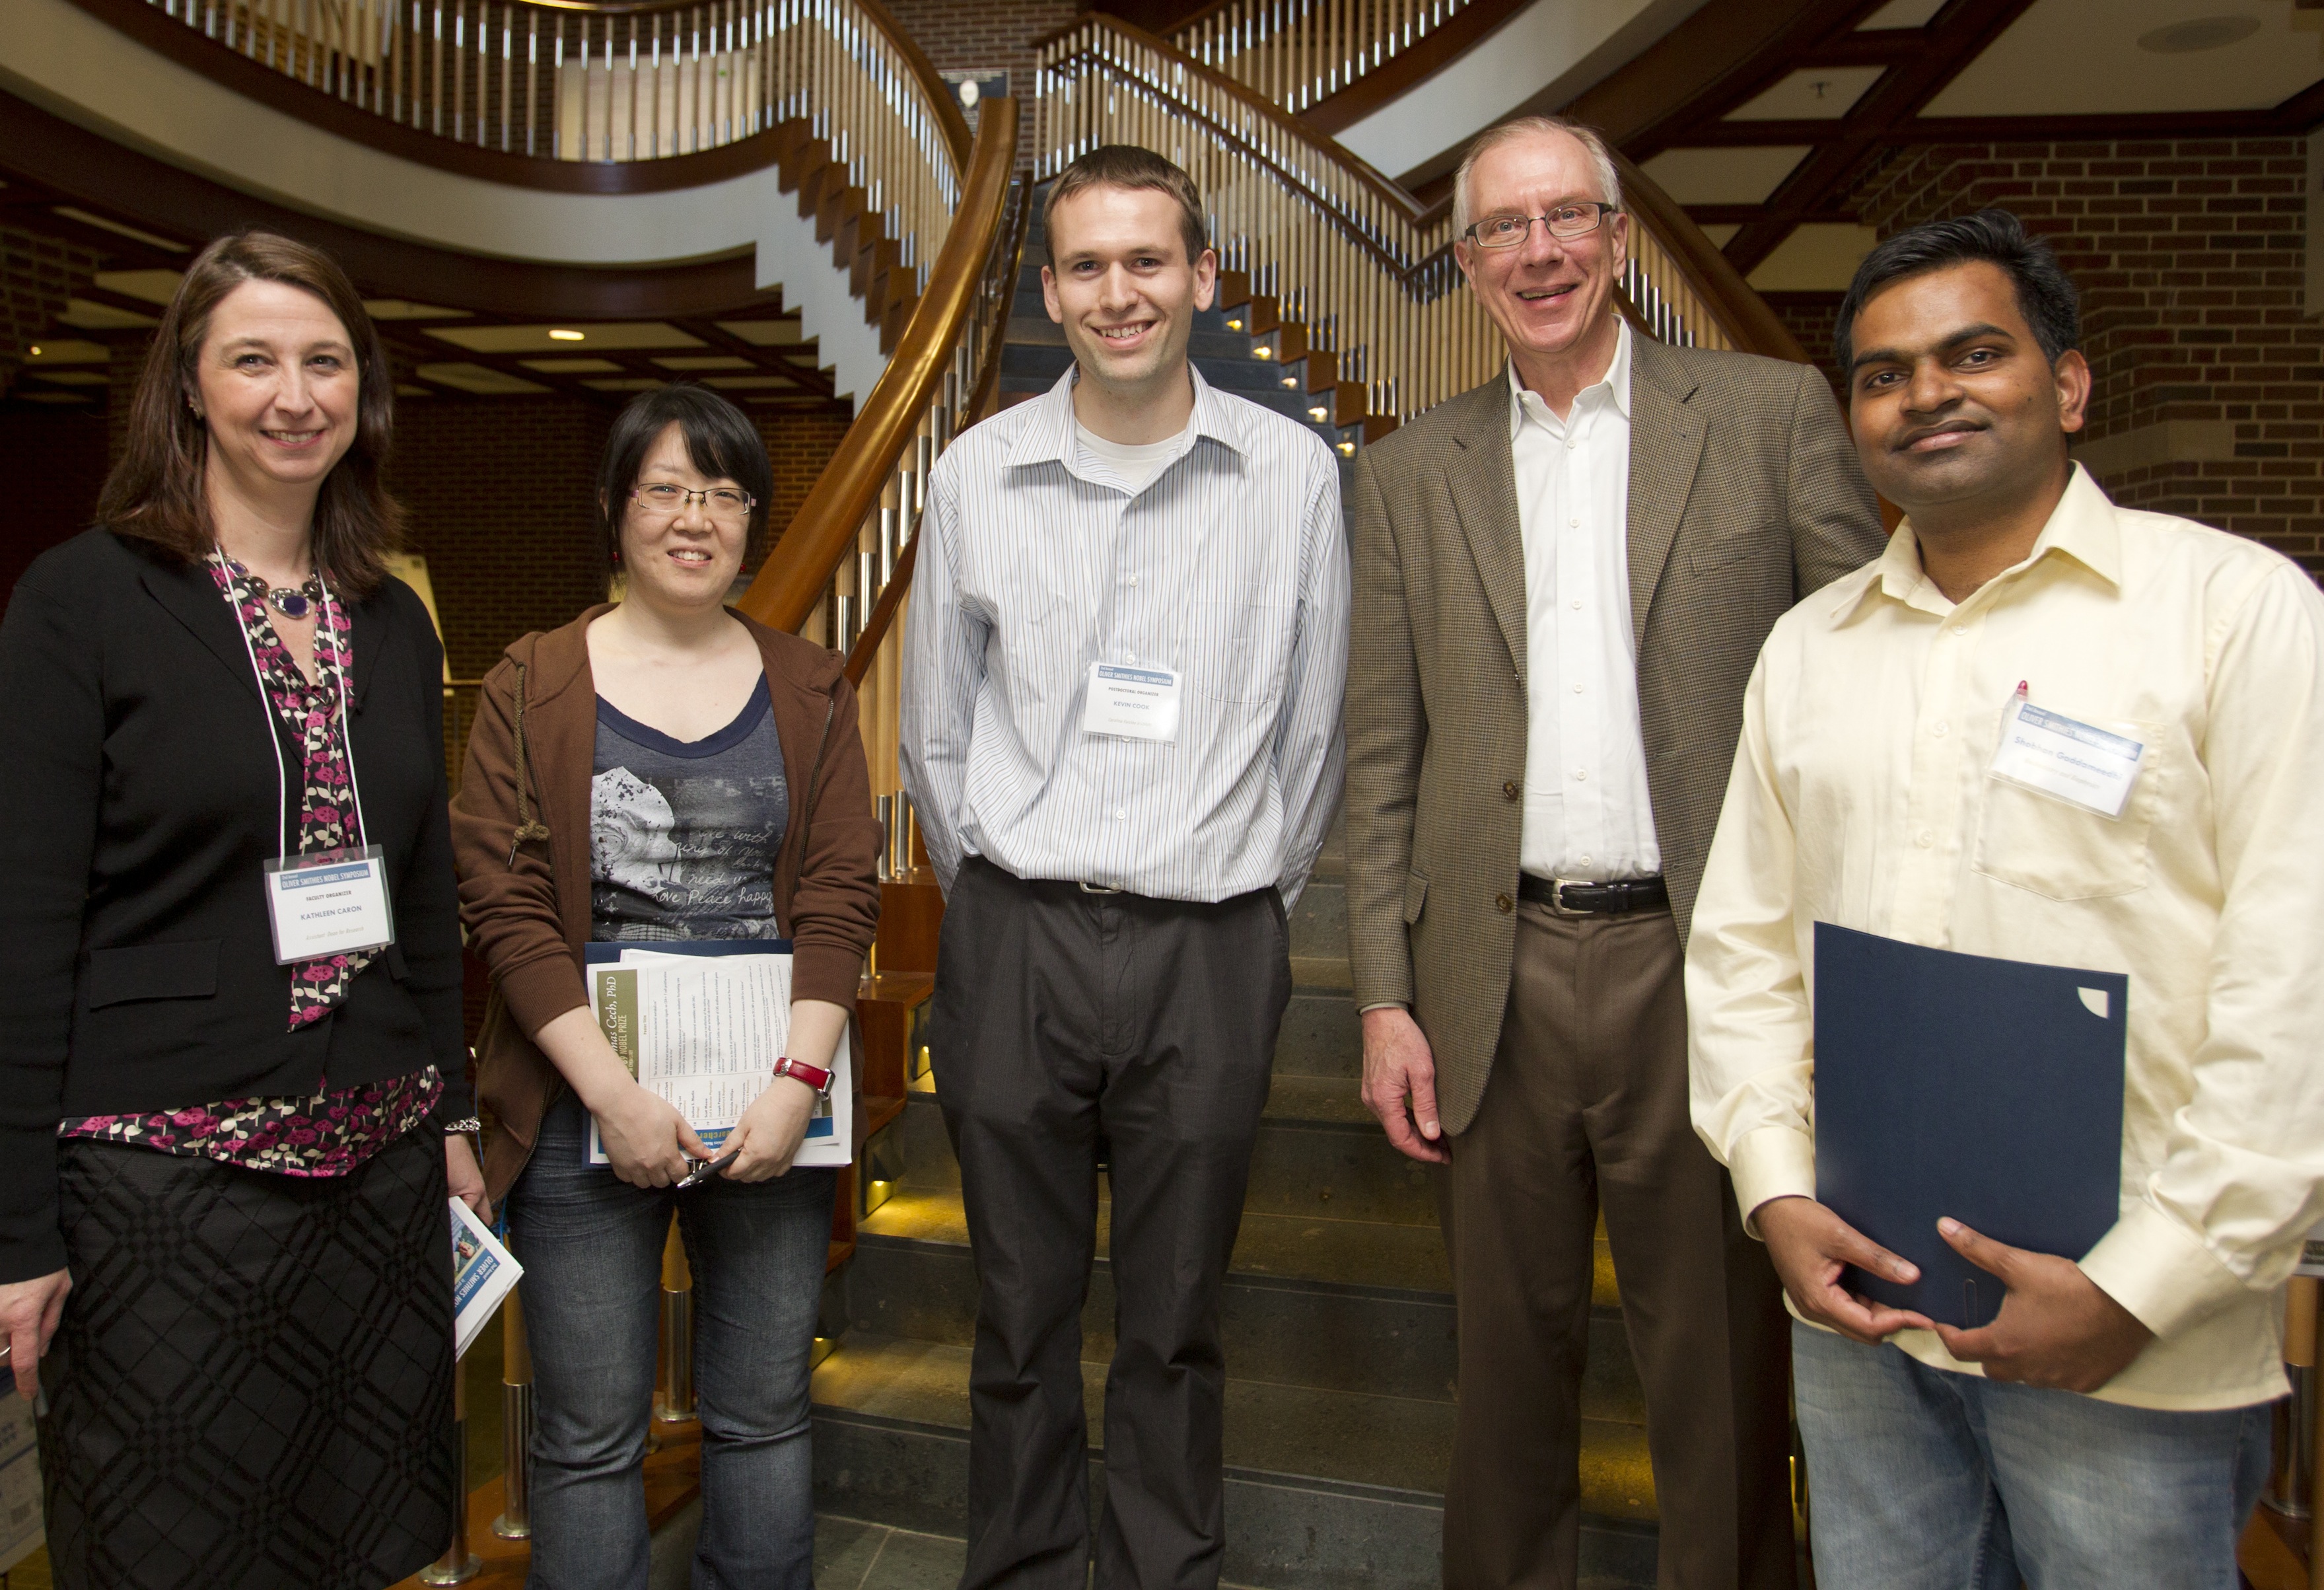 Shobhan Gaddameedhi, PhD (on far right)